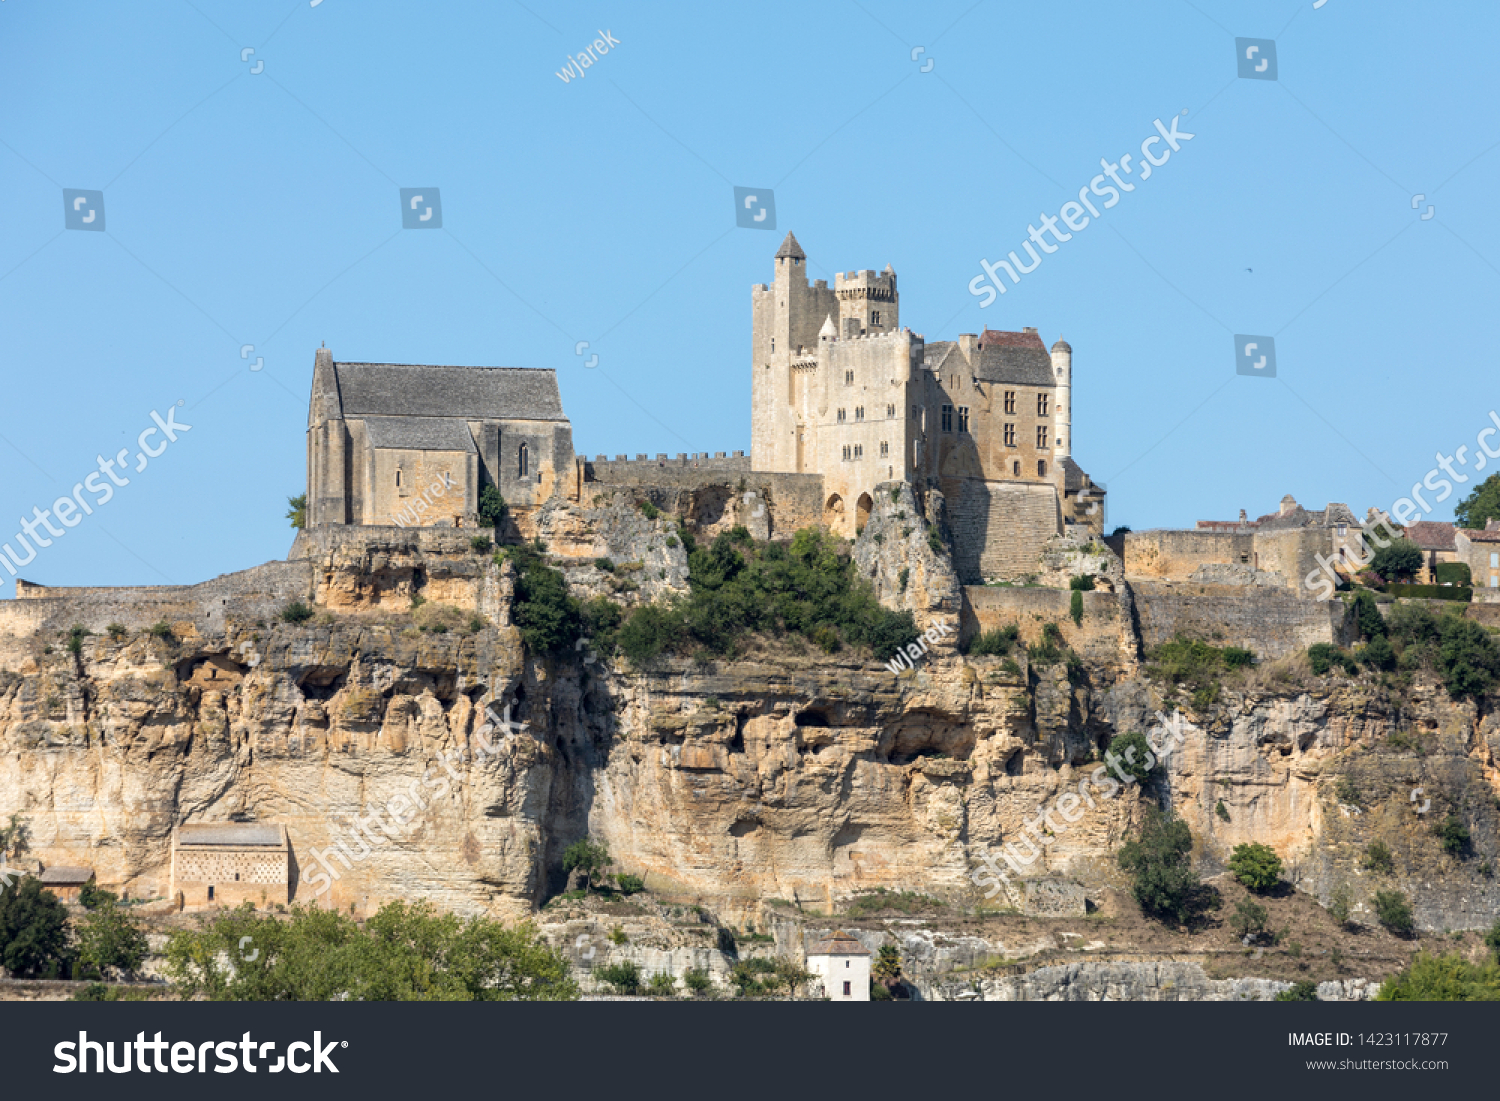  The medieval Chateau de Beynac rising on a limestone cliff above the Dordogne River. France, Dordogne department, Beynac-et-Cazenac #1423117877